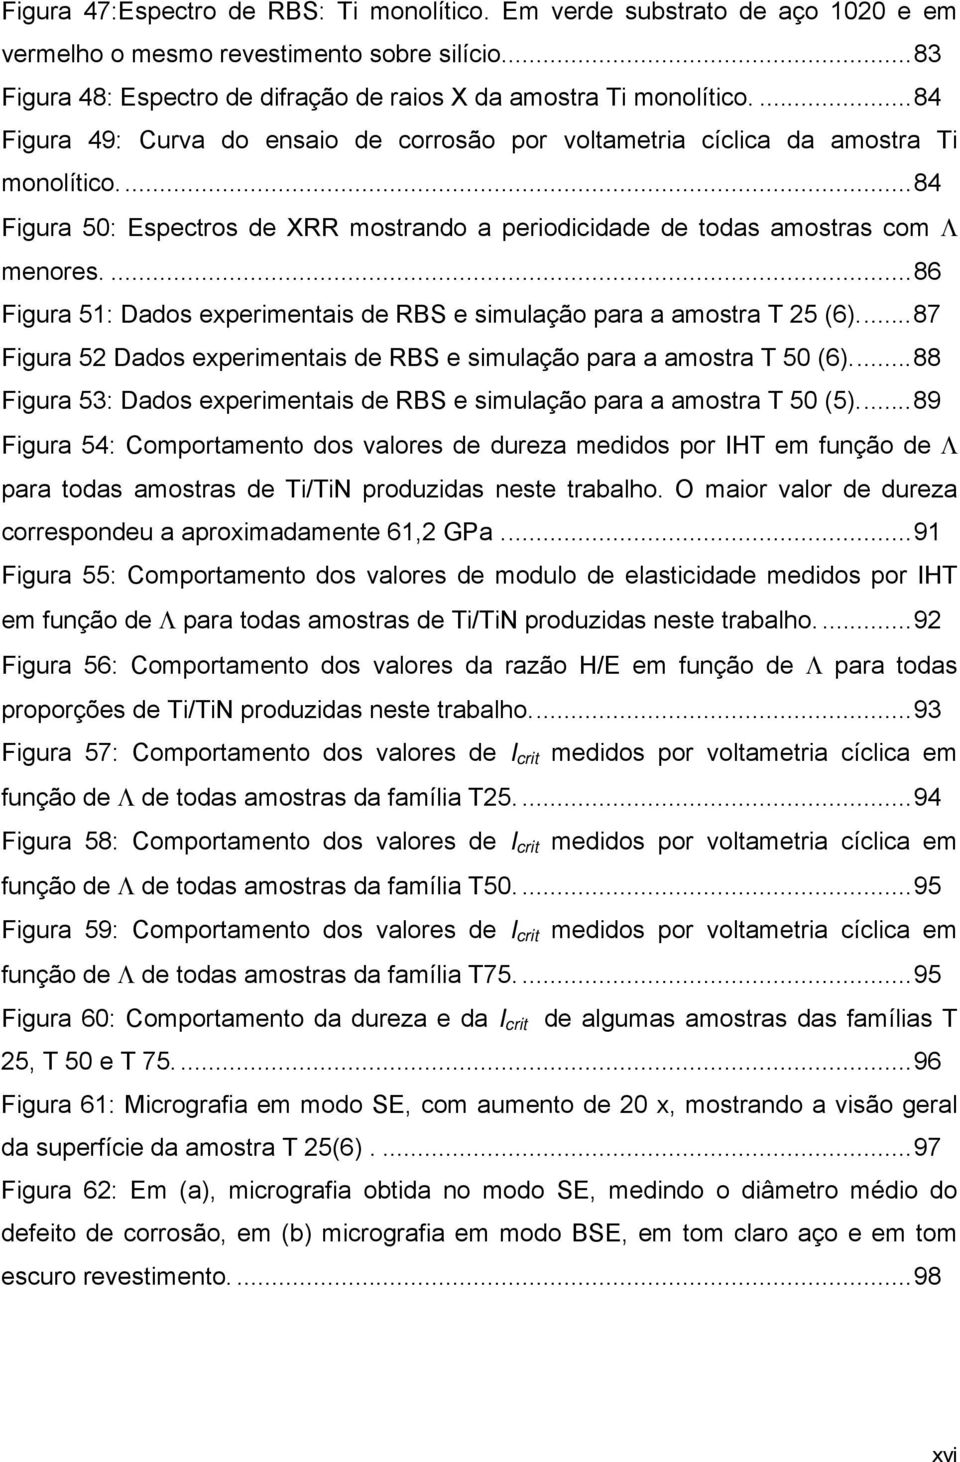 ...86 Figura 51: Dados experimentais de RBS e simulação para a amostra T 25 (6)...87 Figura 52 Dados experimentais de RBS e simulação para a amostra T 50 (6).